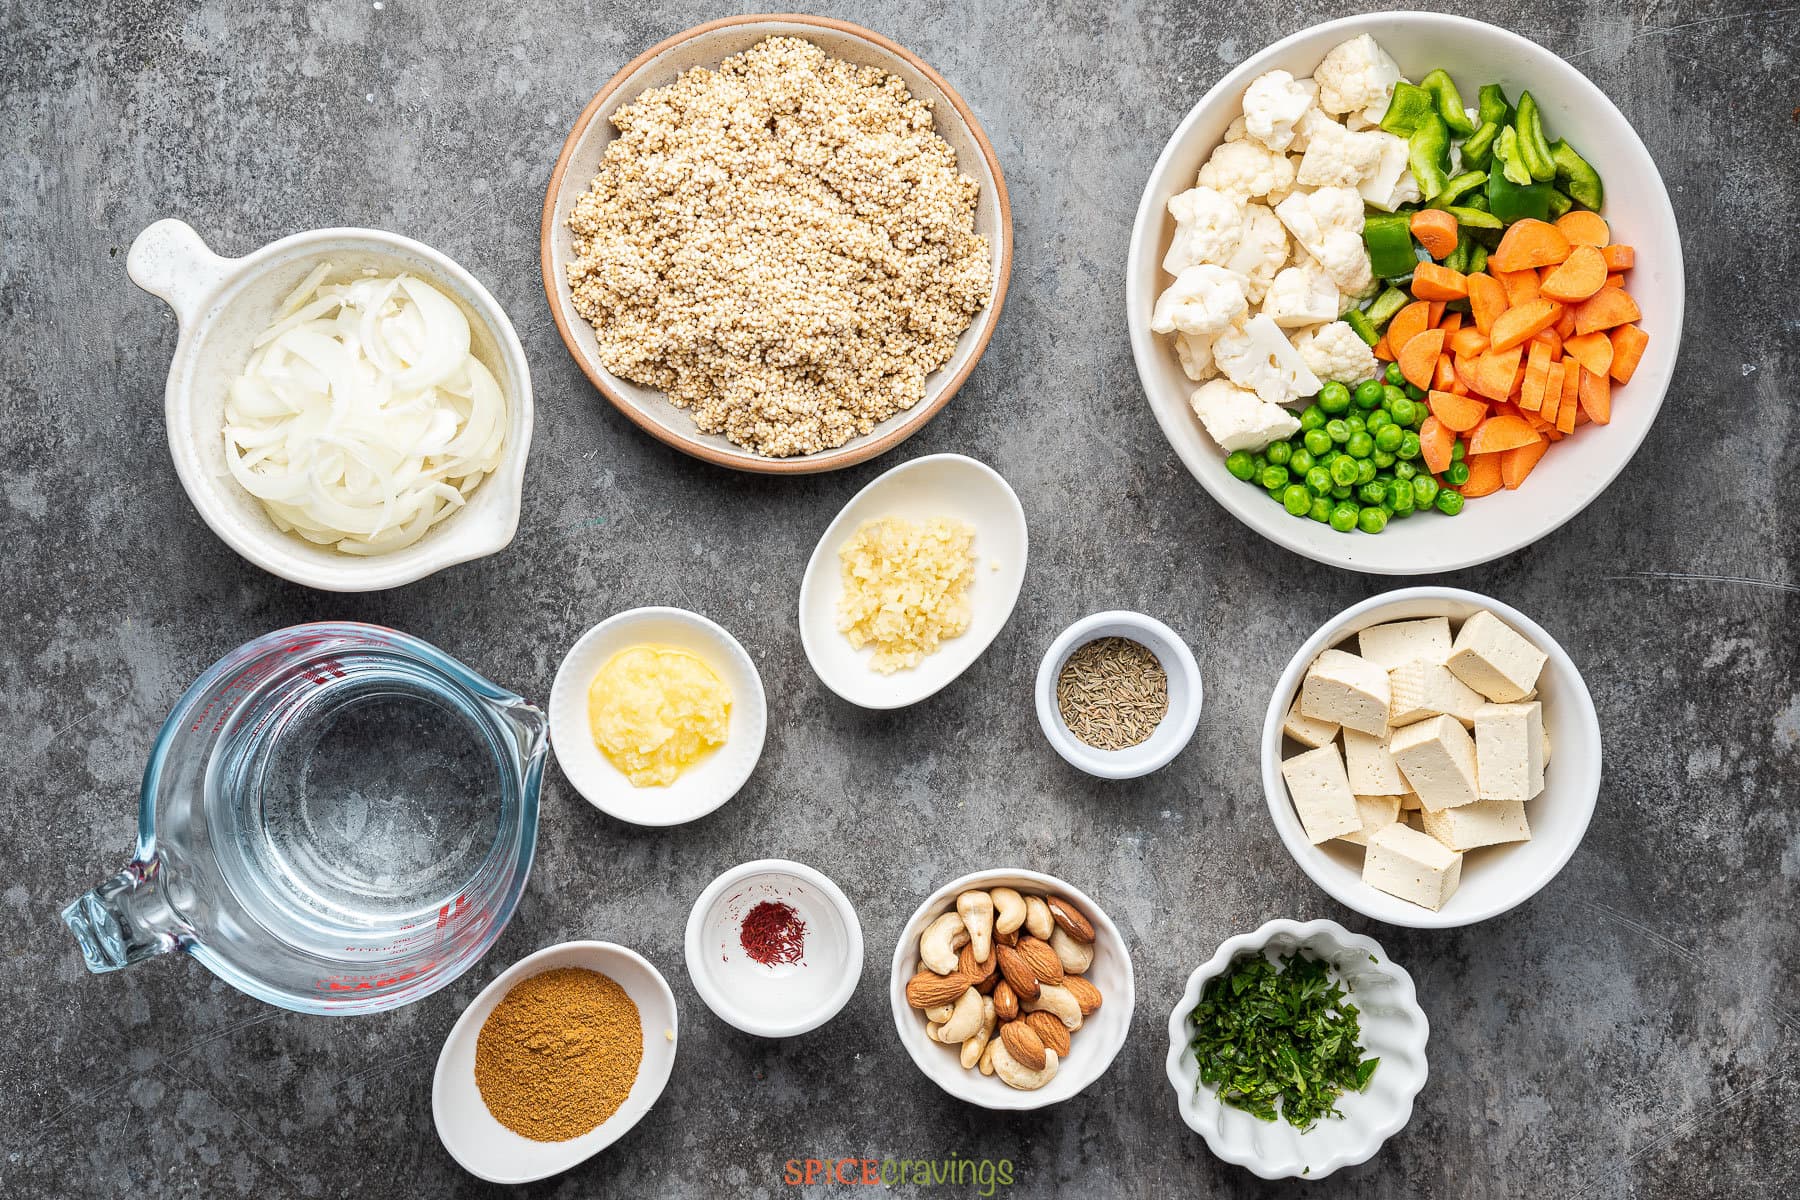 Onions, quinoa, vegetables, tofu among other ingredients for making quinoa biryani